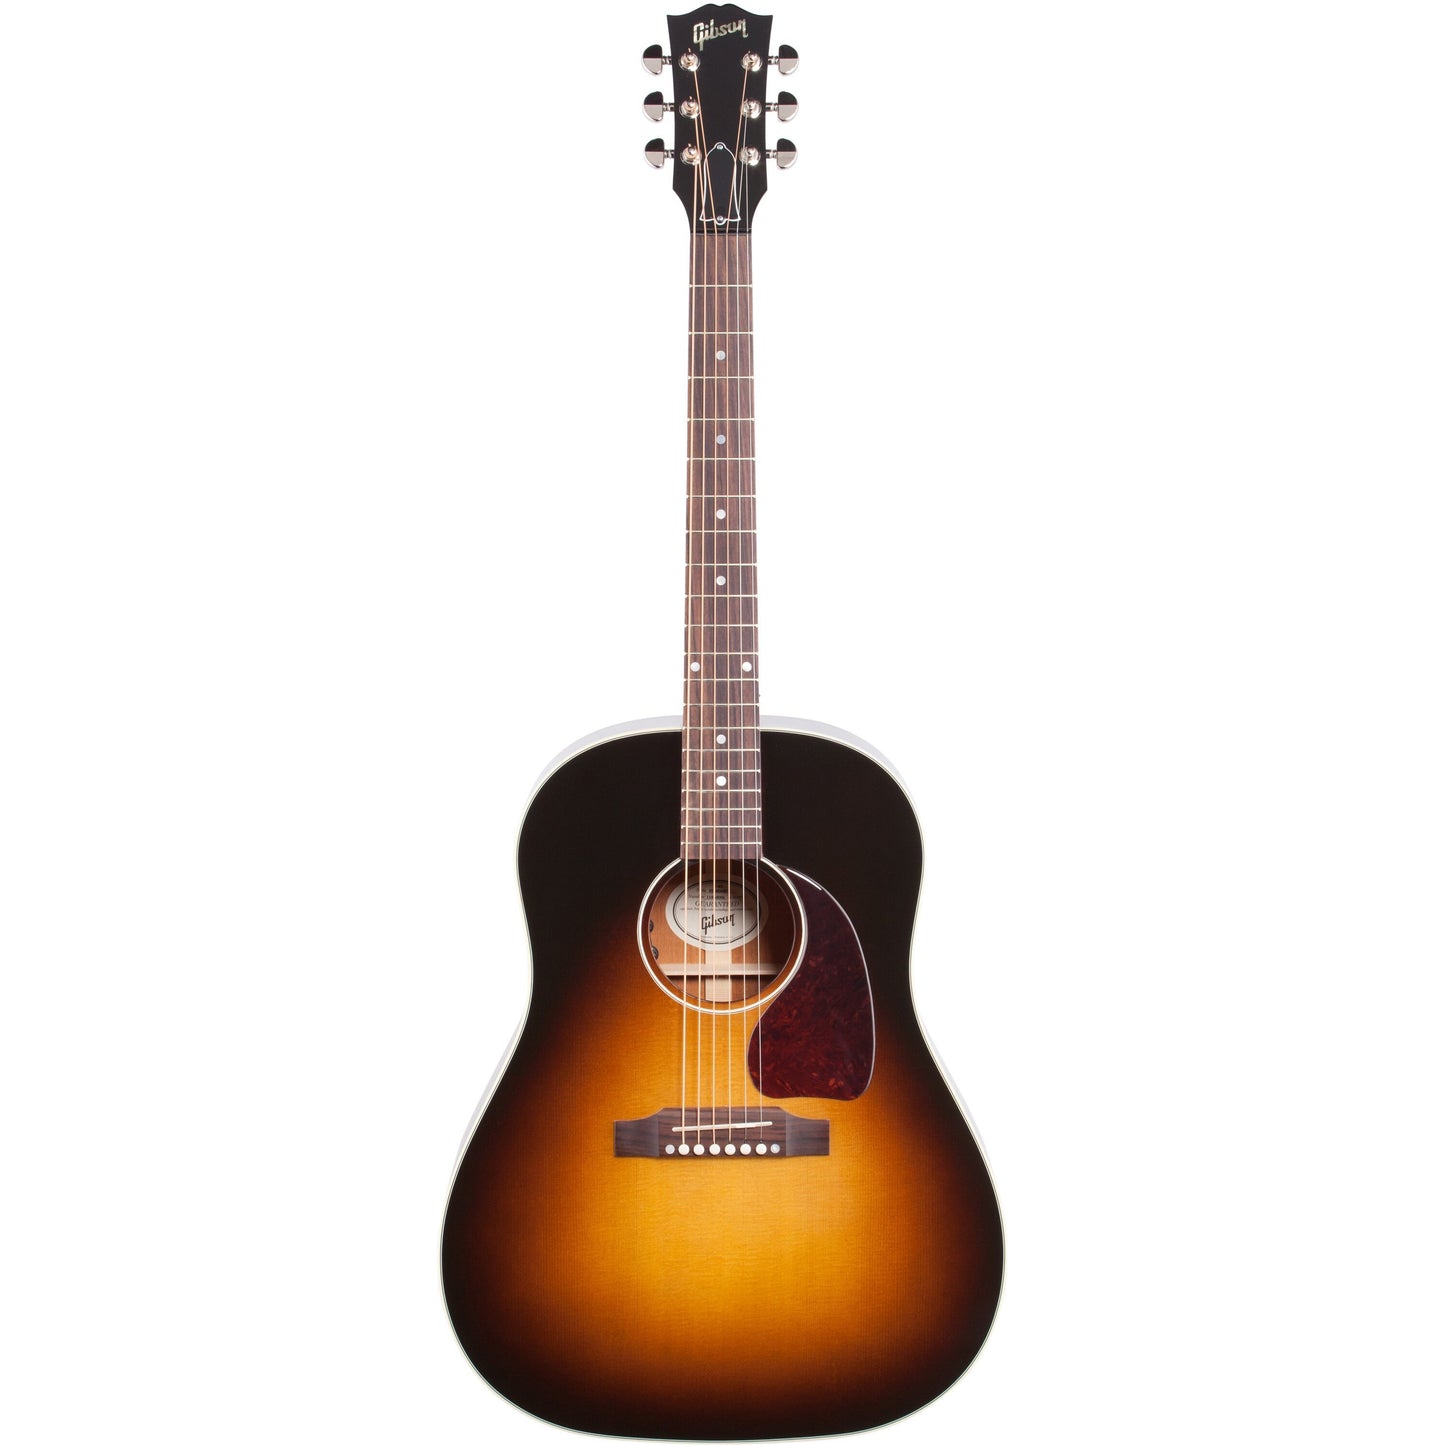 Gibson J-45 Standard Acoustic-Electric Guitar, Vintage Sunburst